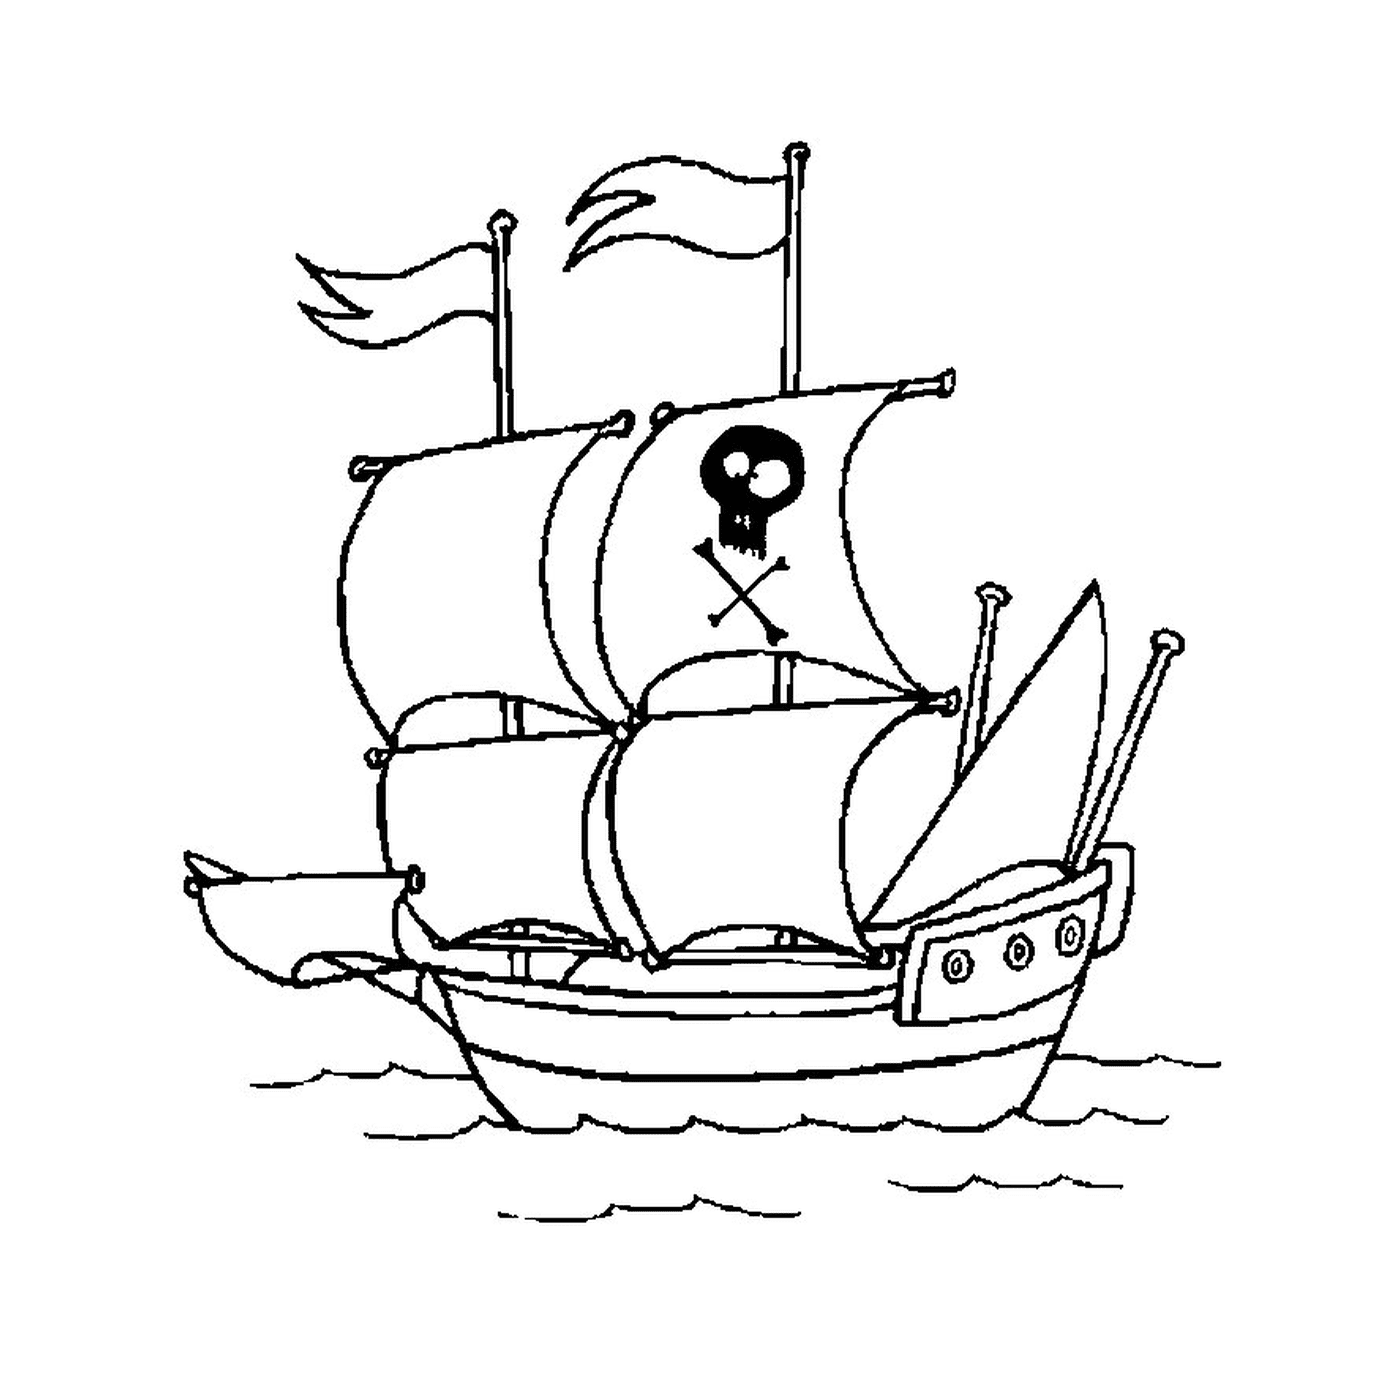  Un barco pirata con cabeza de muerte 